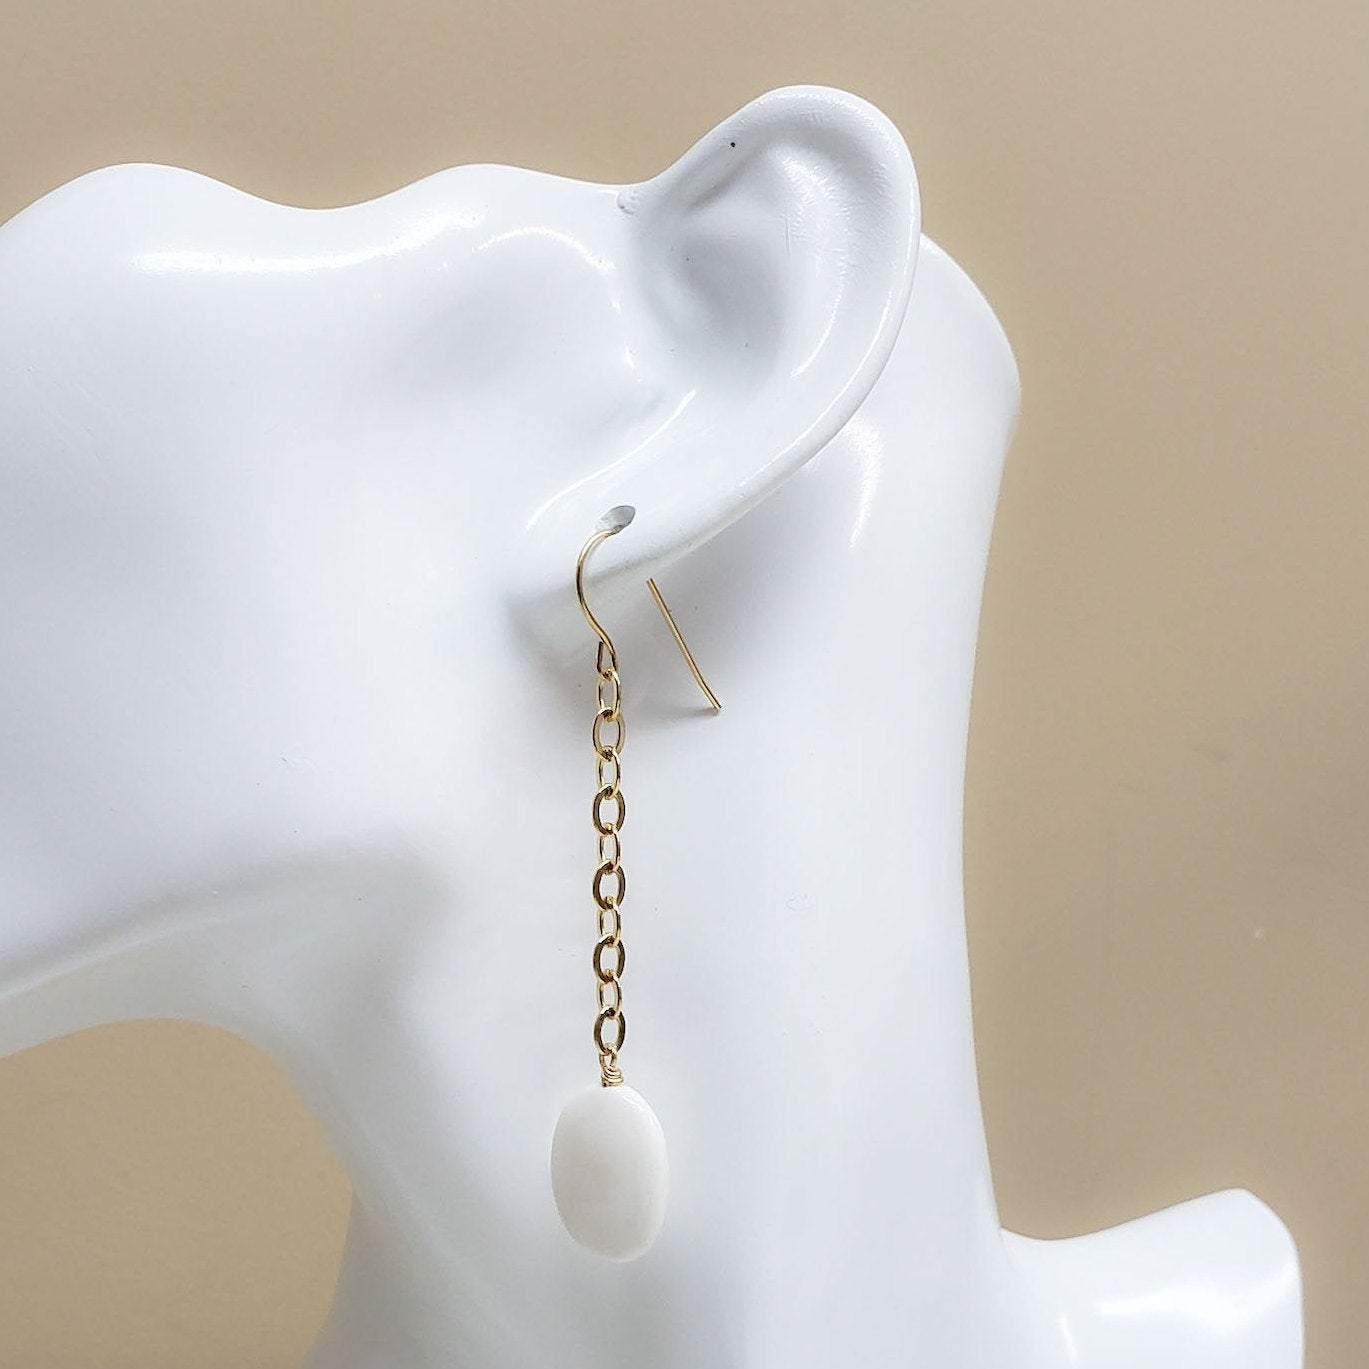 White Jade and gold dangle earrings - LB Designs